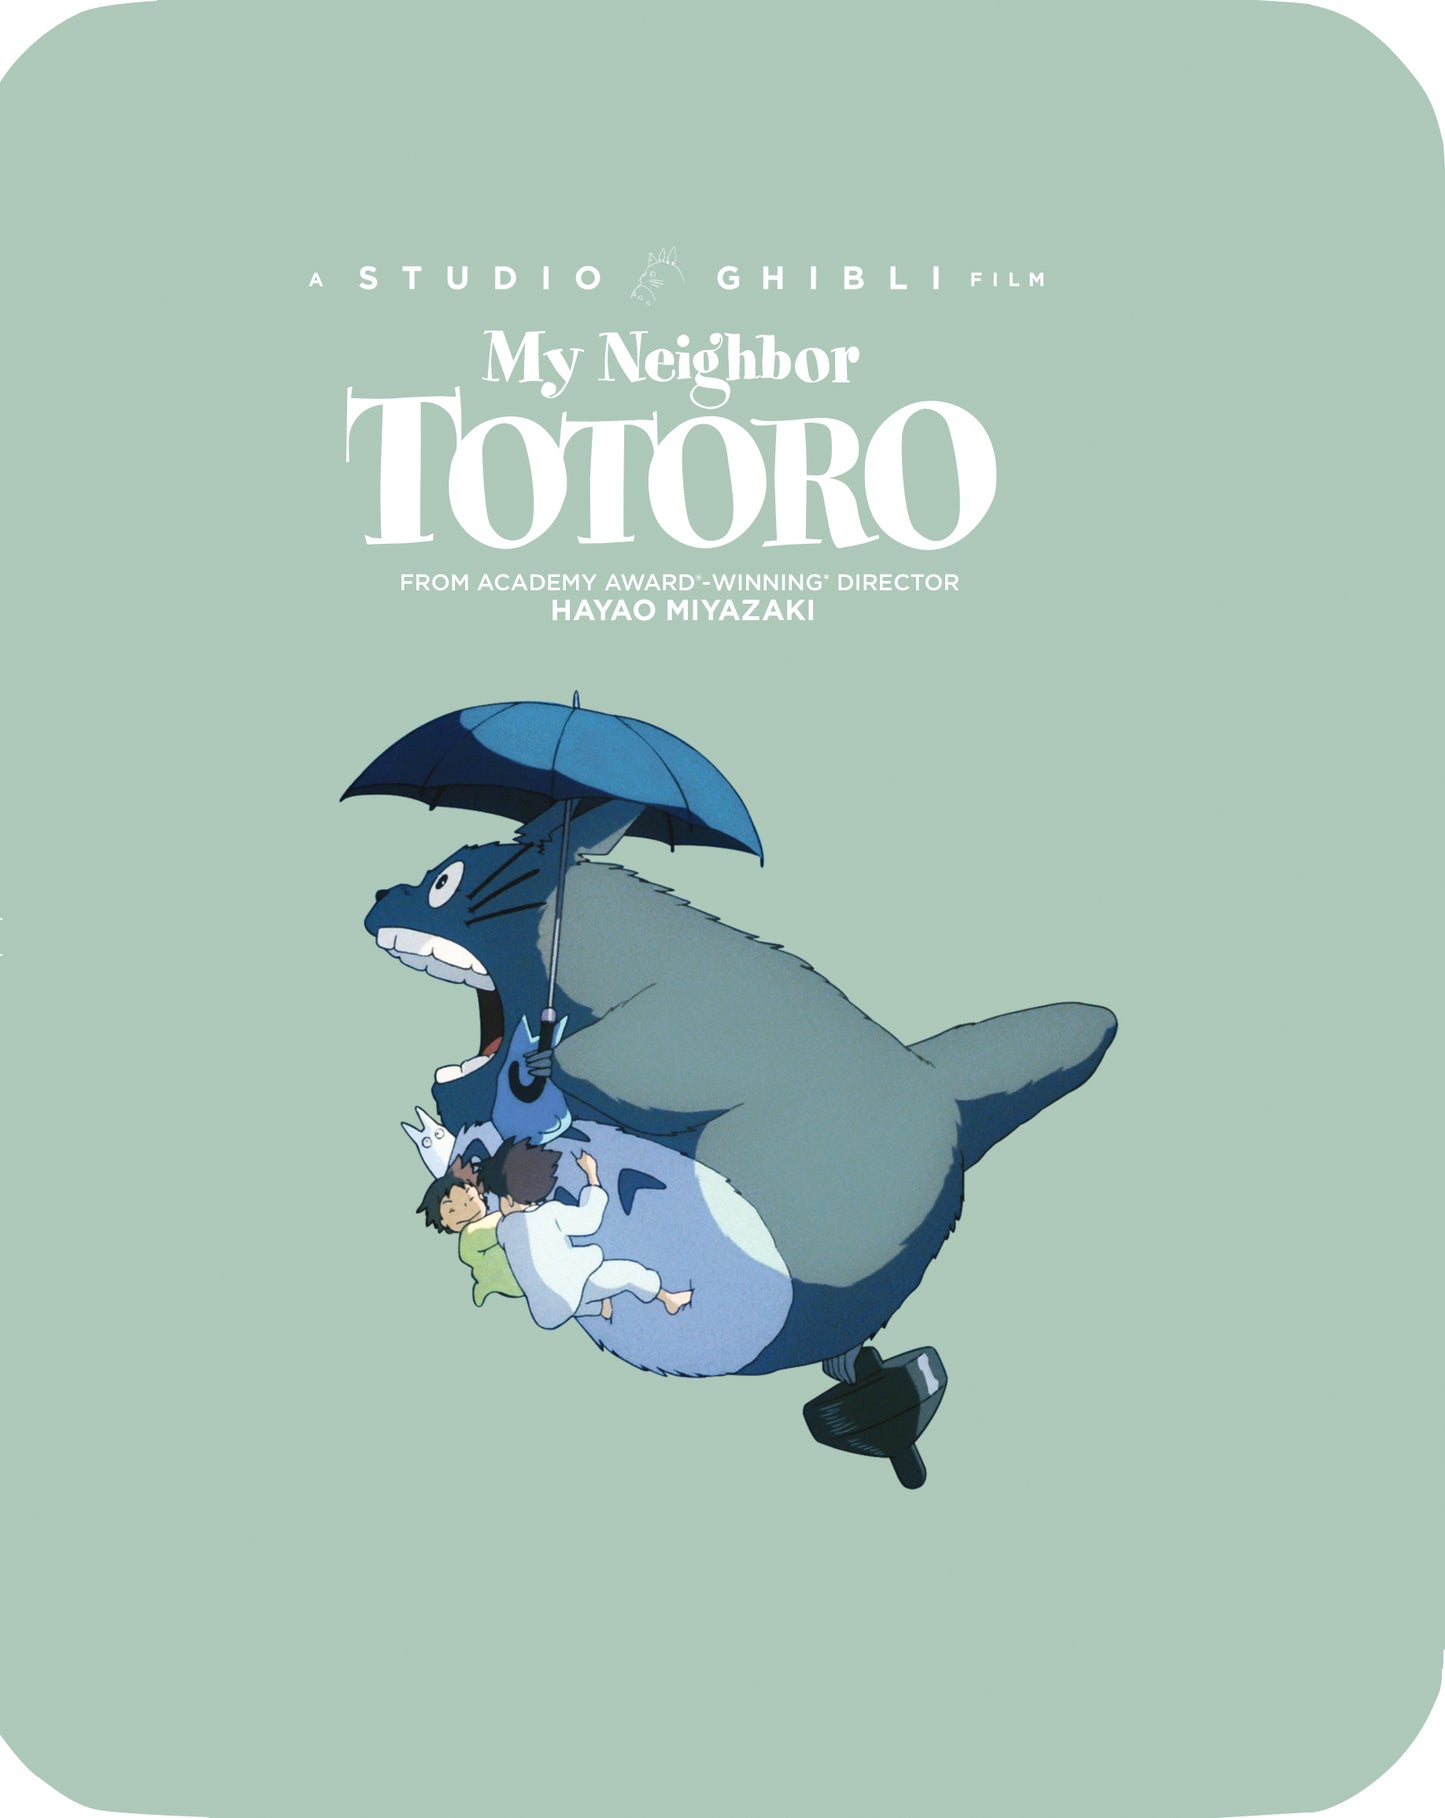 My Neighbor Totoro [SteelBook] [Blu-ray] cover art